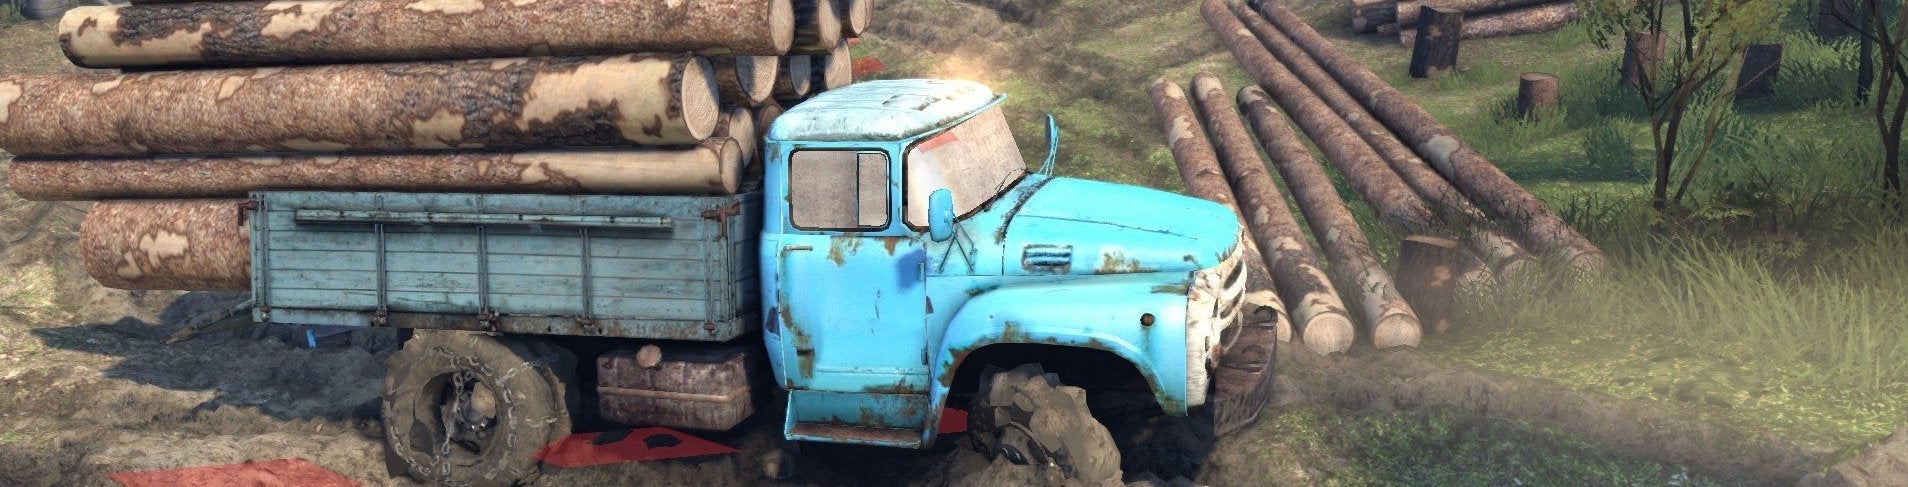 Image for DOJMY ze Spintires: Off-road Truck Simulator